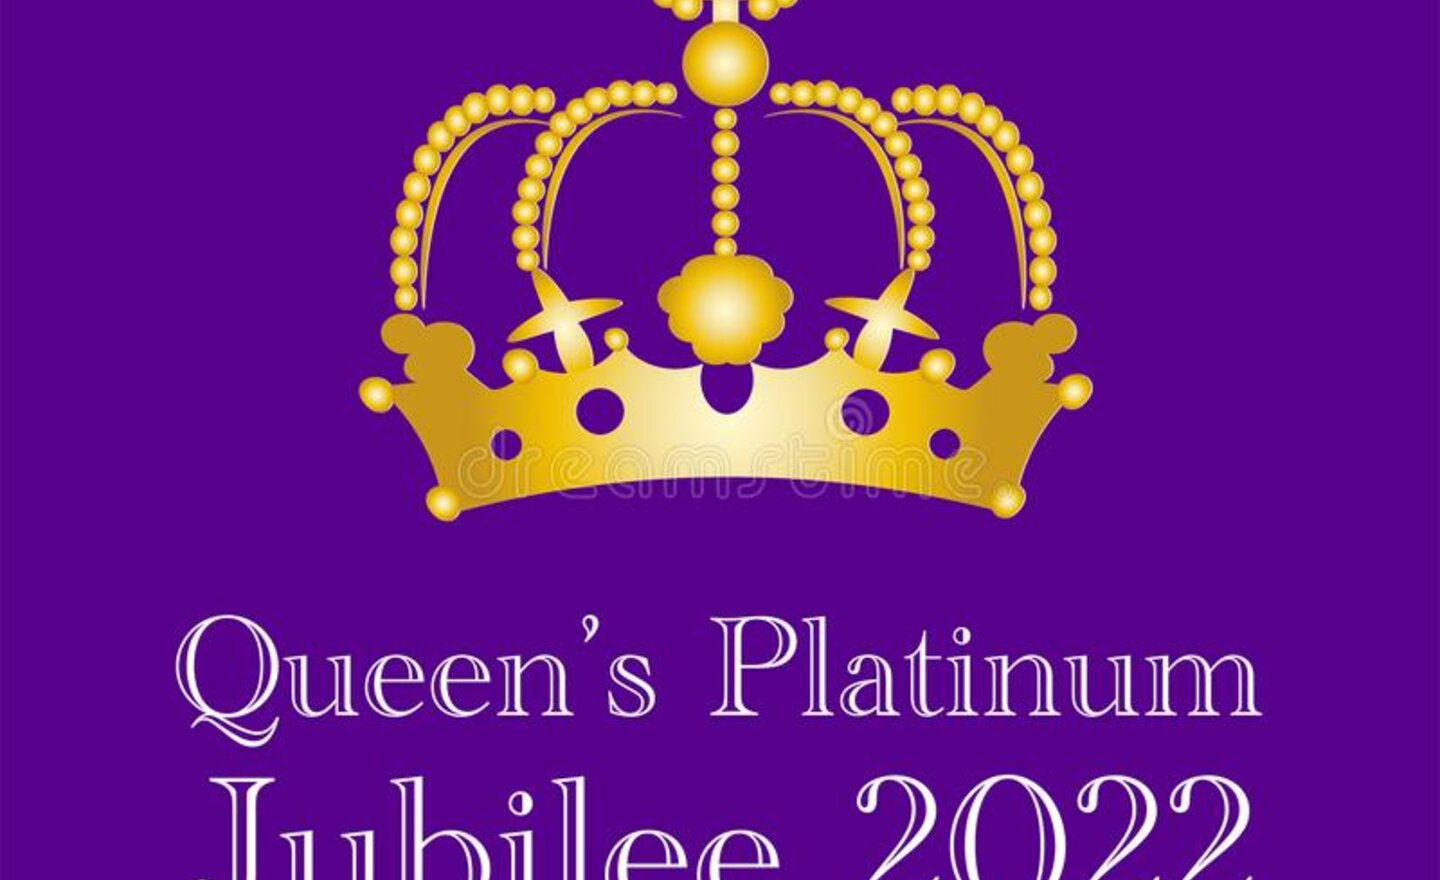 Image of Platinum Jubilee